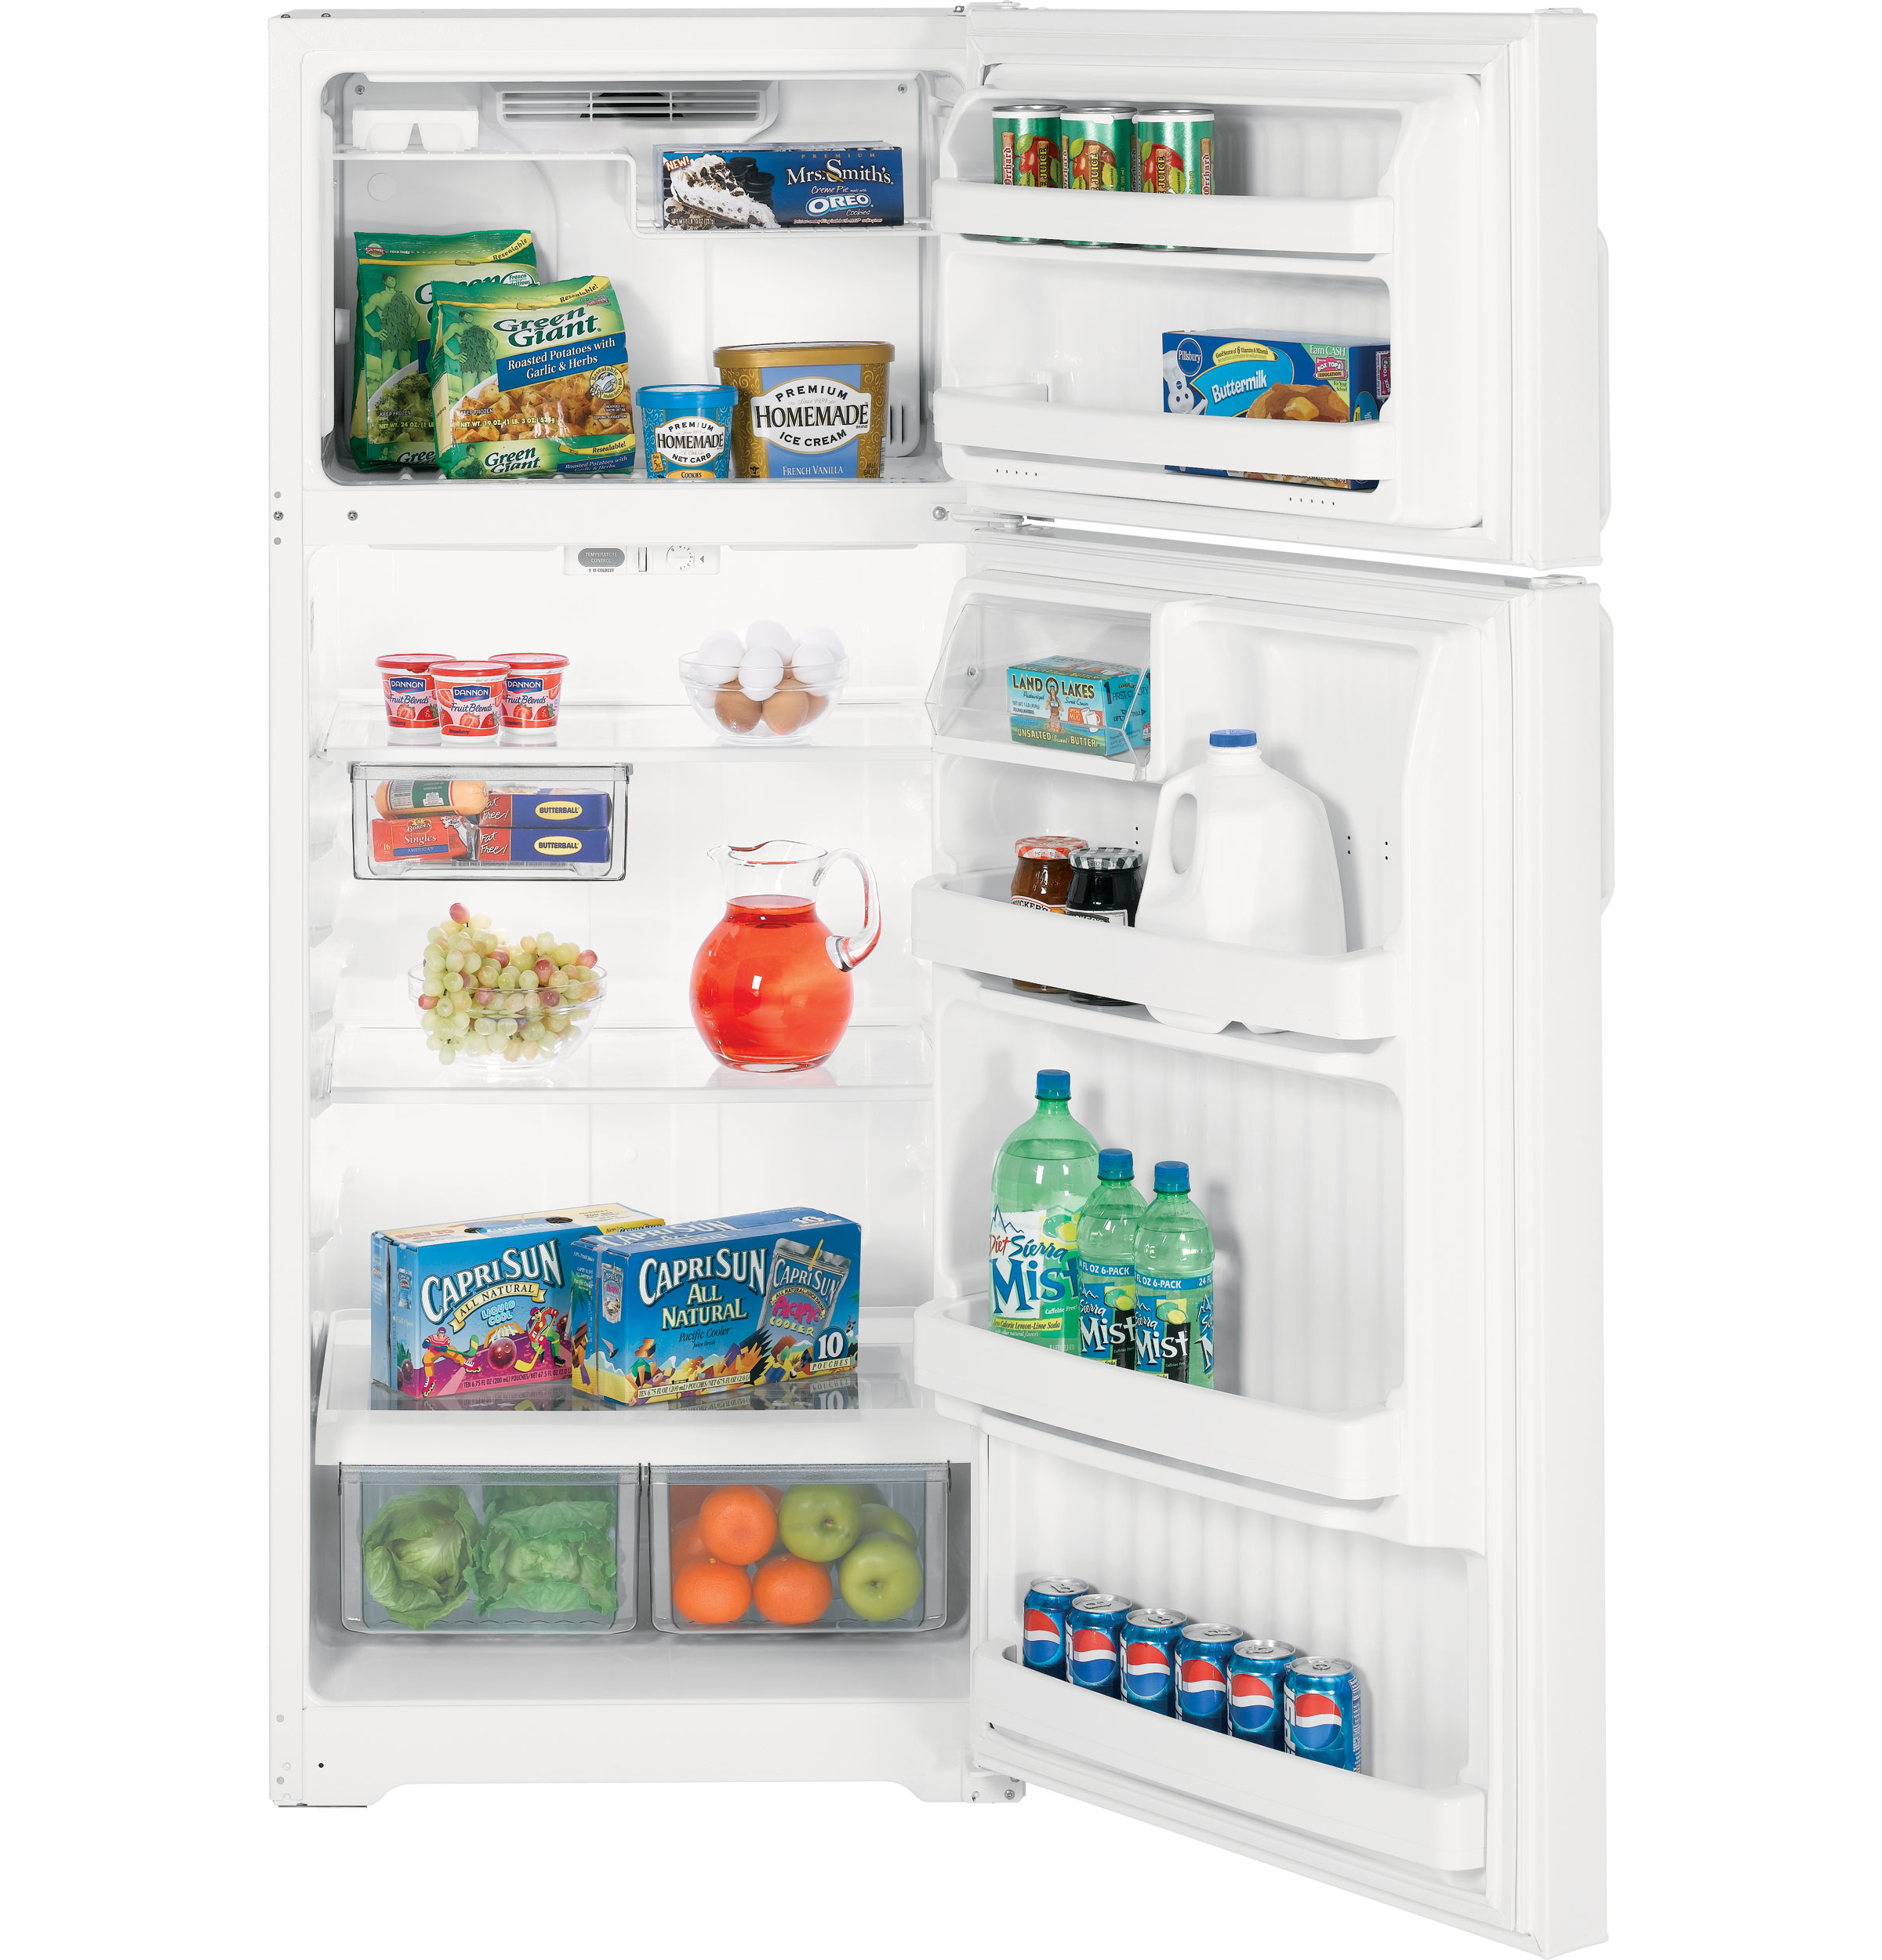 Hotpoint® 18.2 Cu. Ft. Top-Freezer Refrigerator